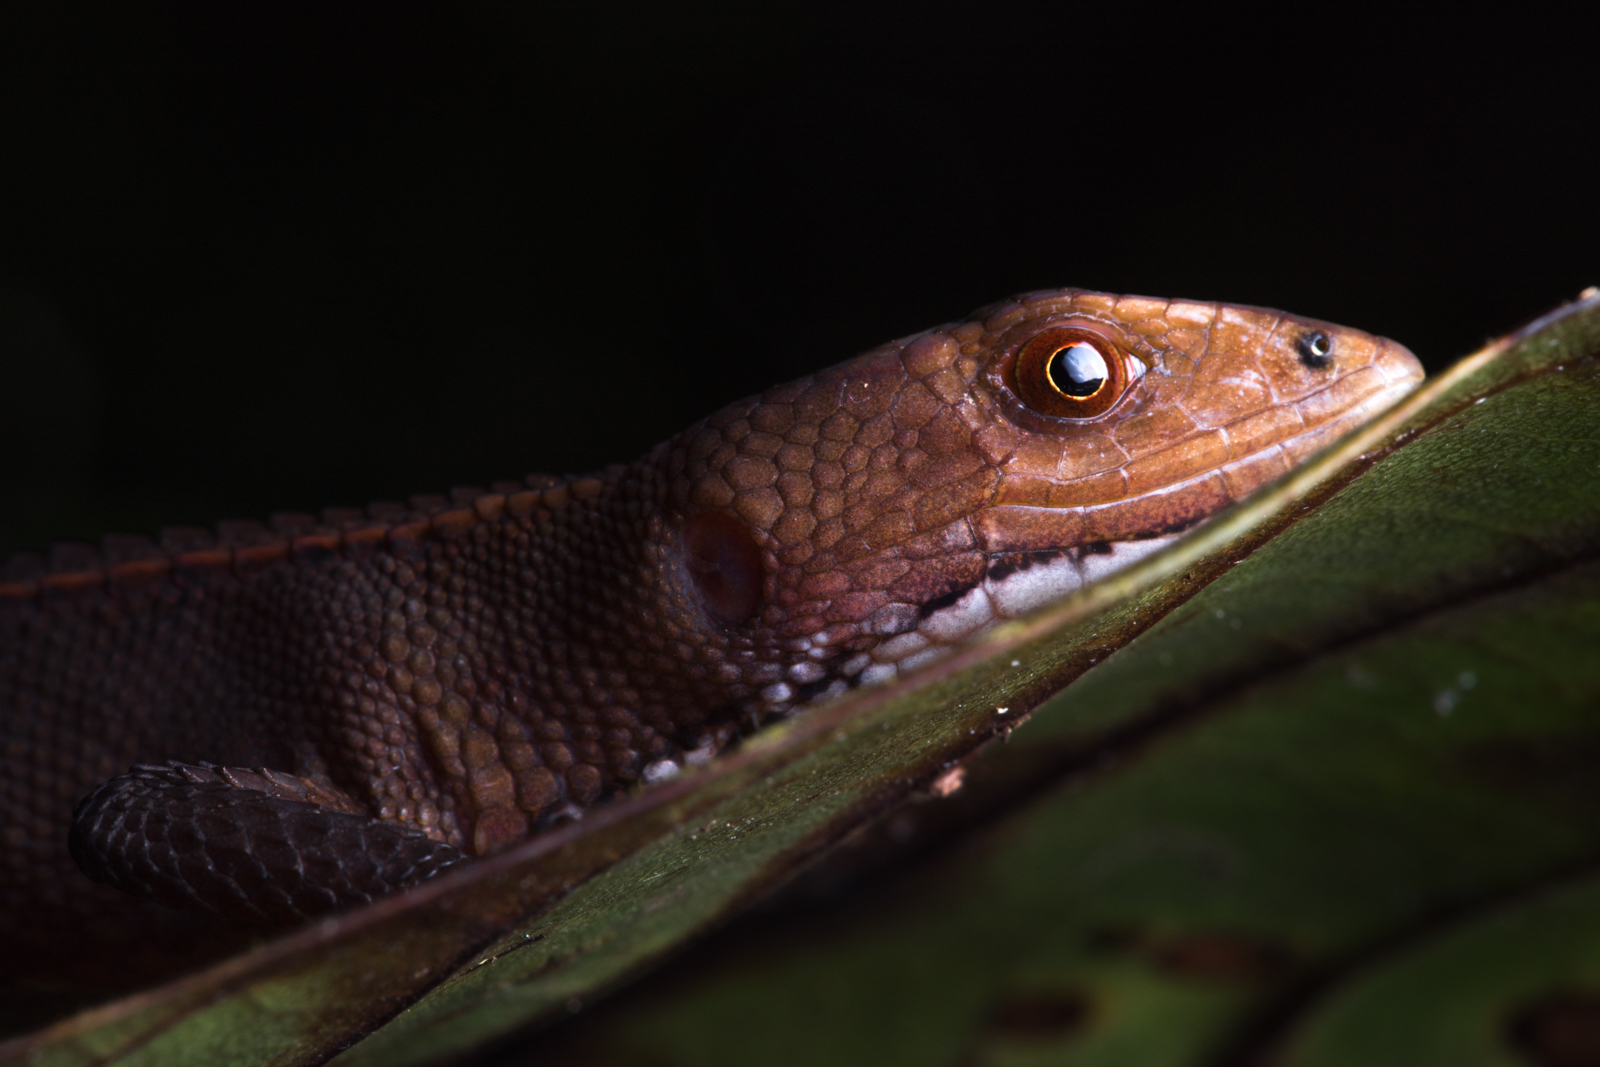 Picture of a lizard (Gelanesaurus flavogularis) resting on a leaf